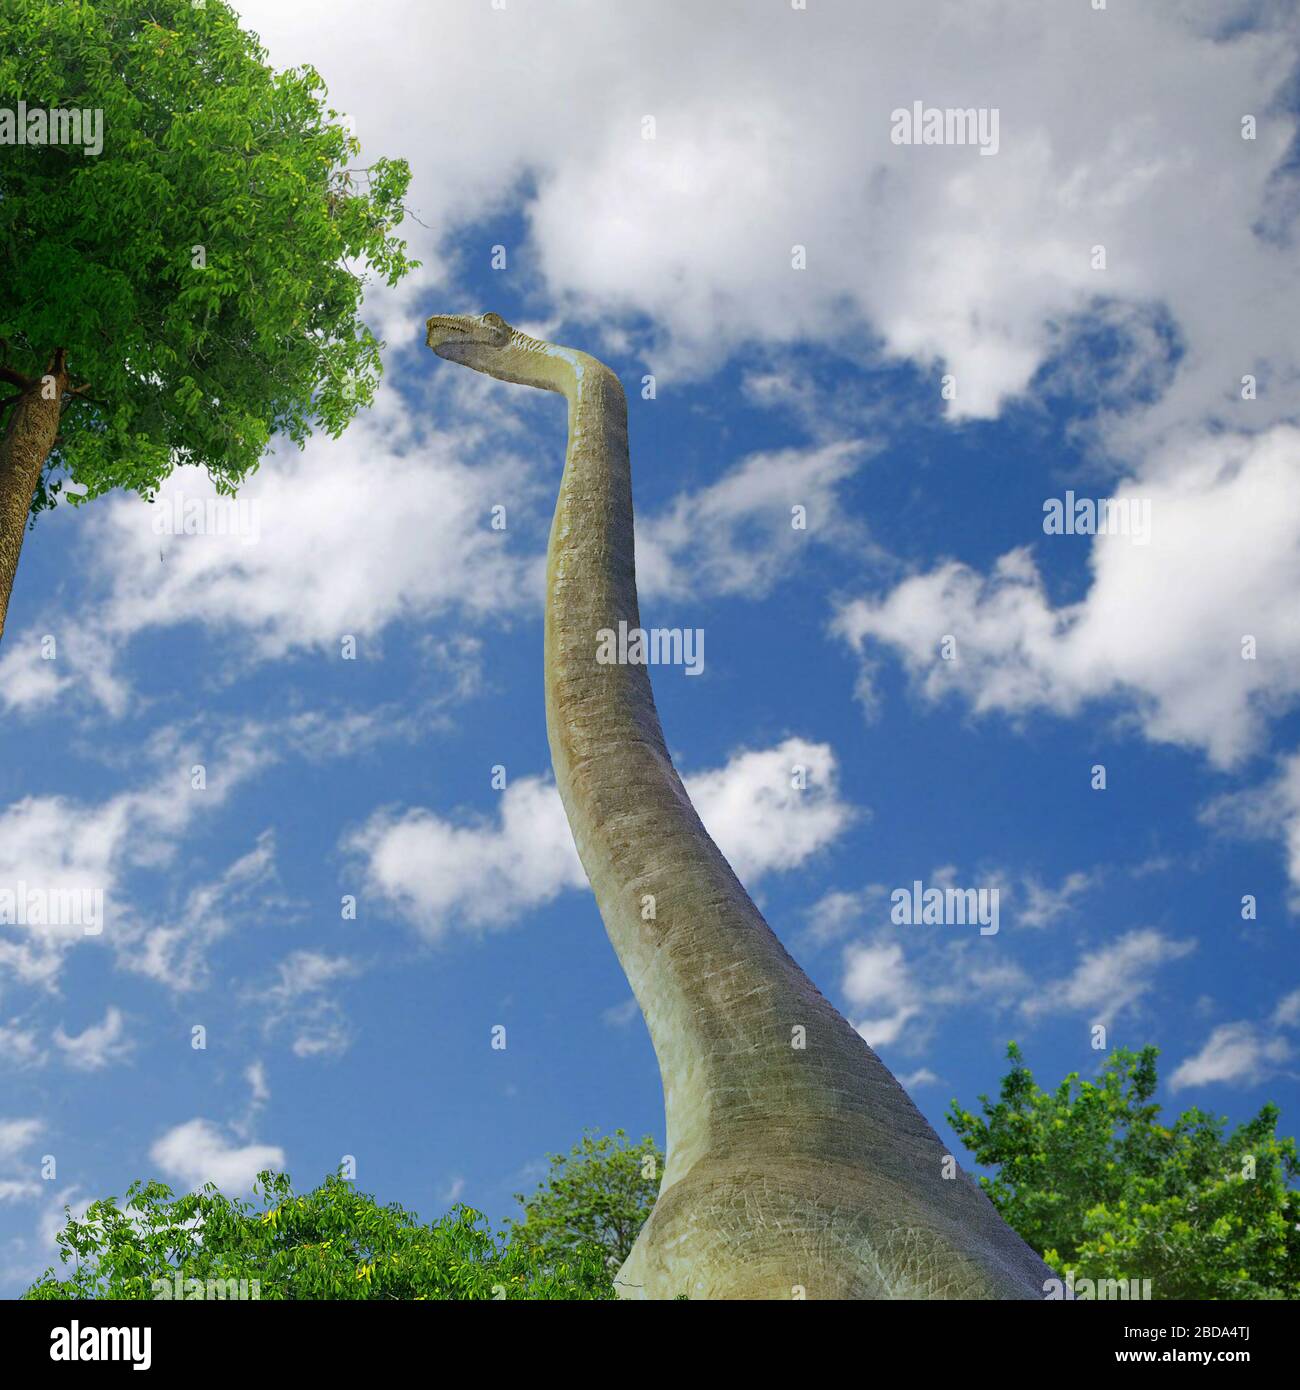 Dinosaur live image Stock Photo